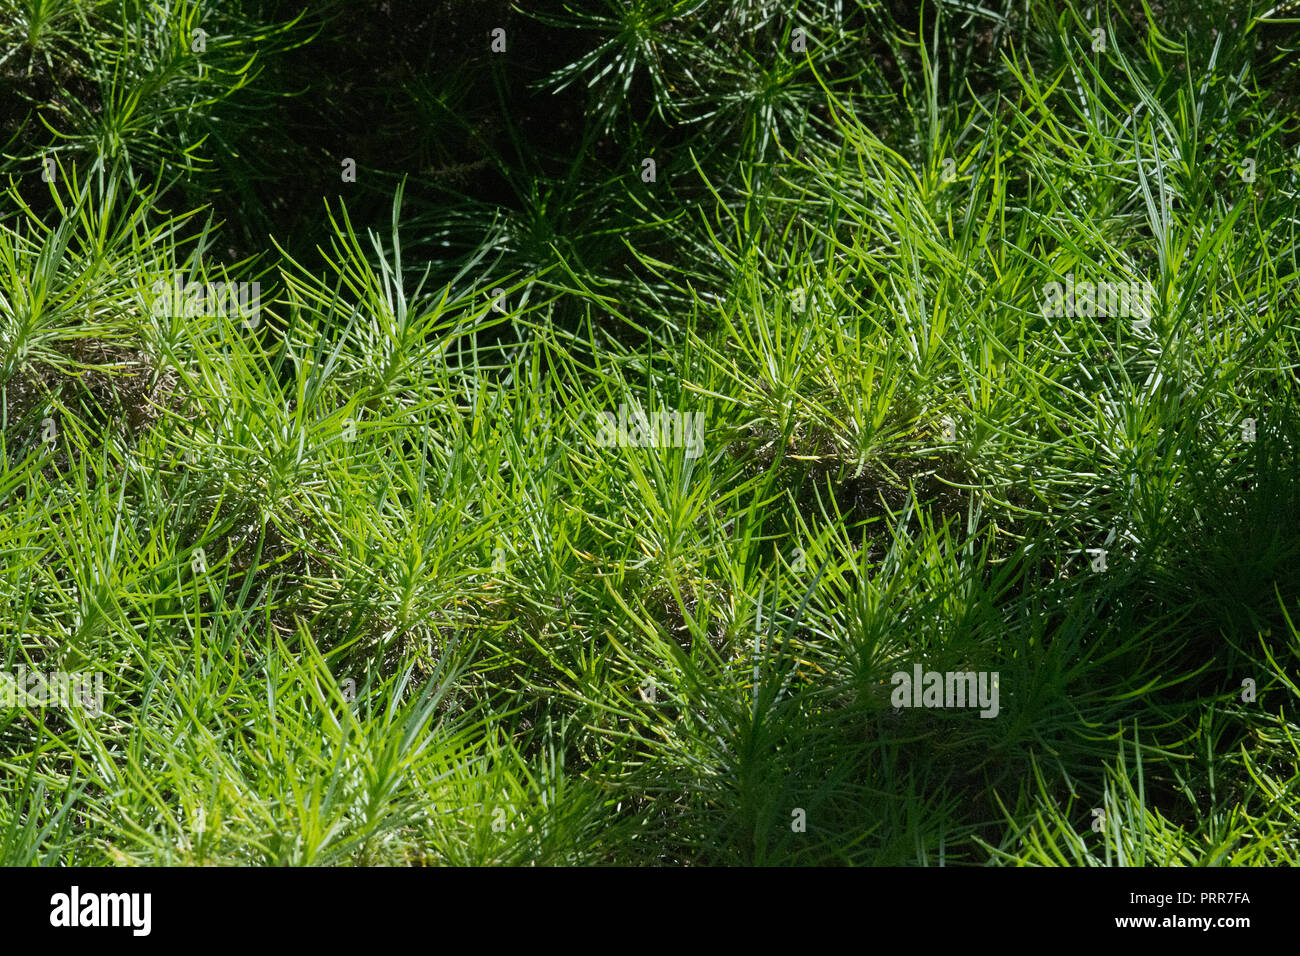 Green grassy plant Plantago arborescens endemic to Mallorca, Spain. Stock Photo